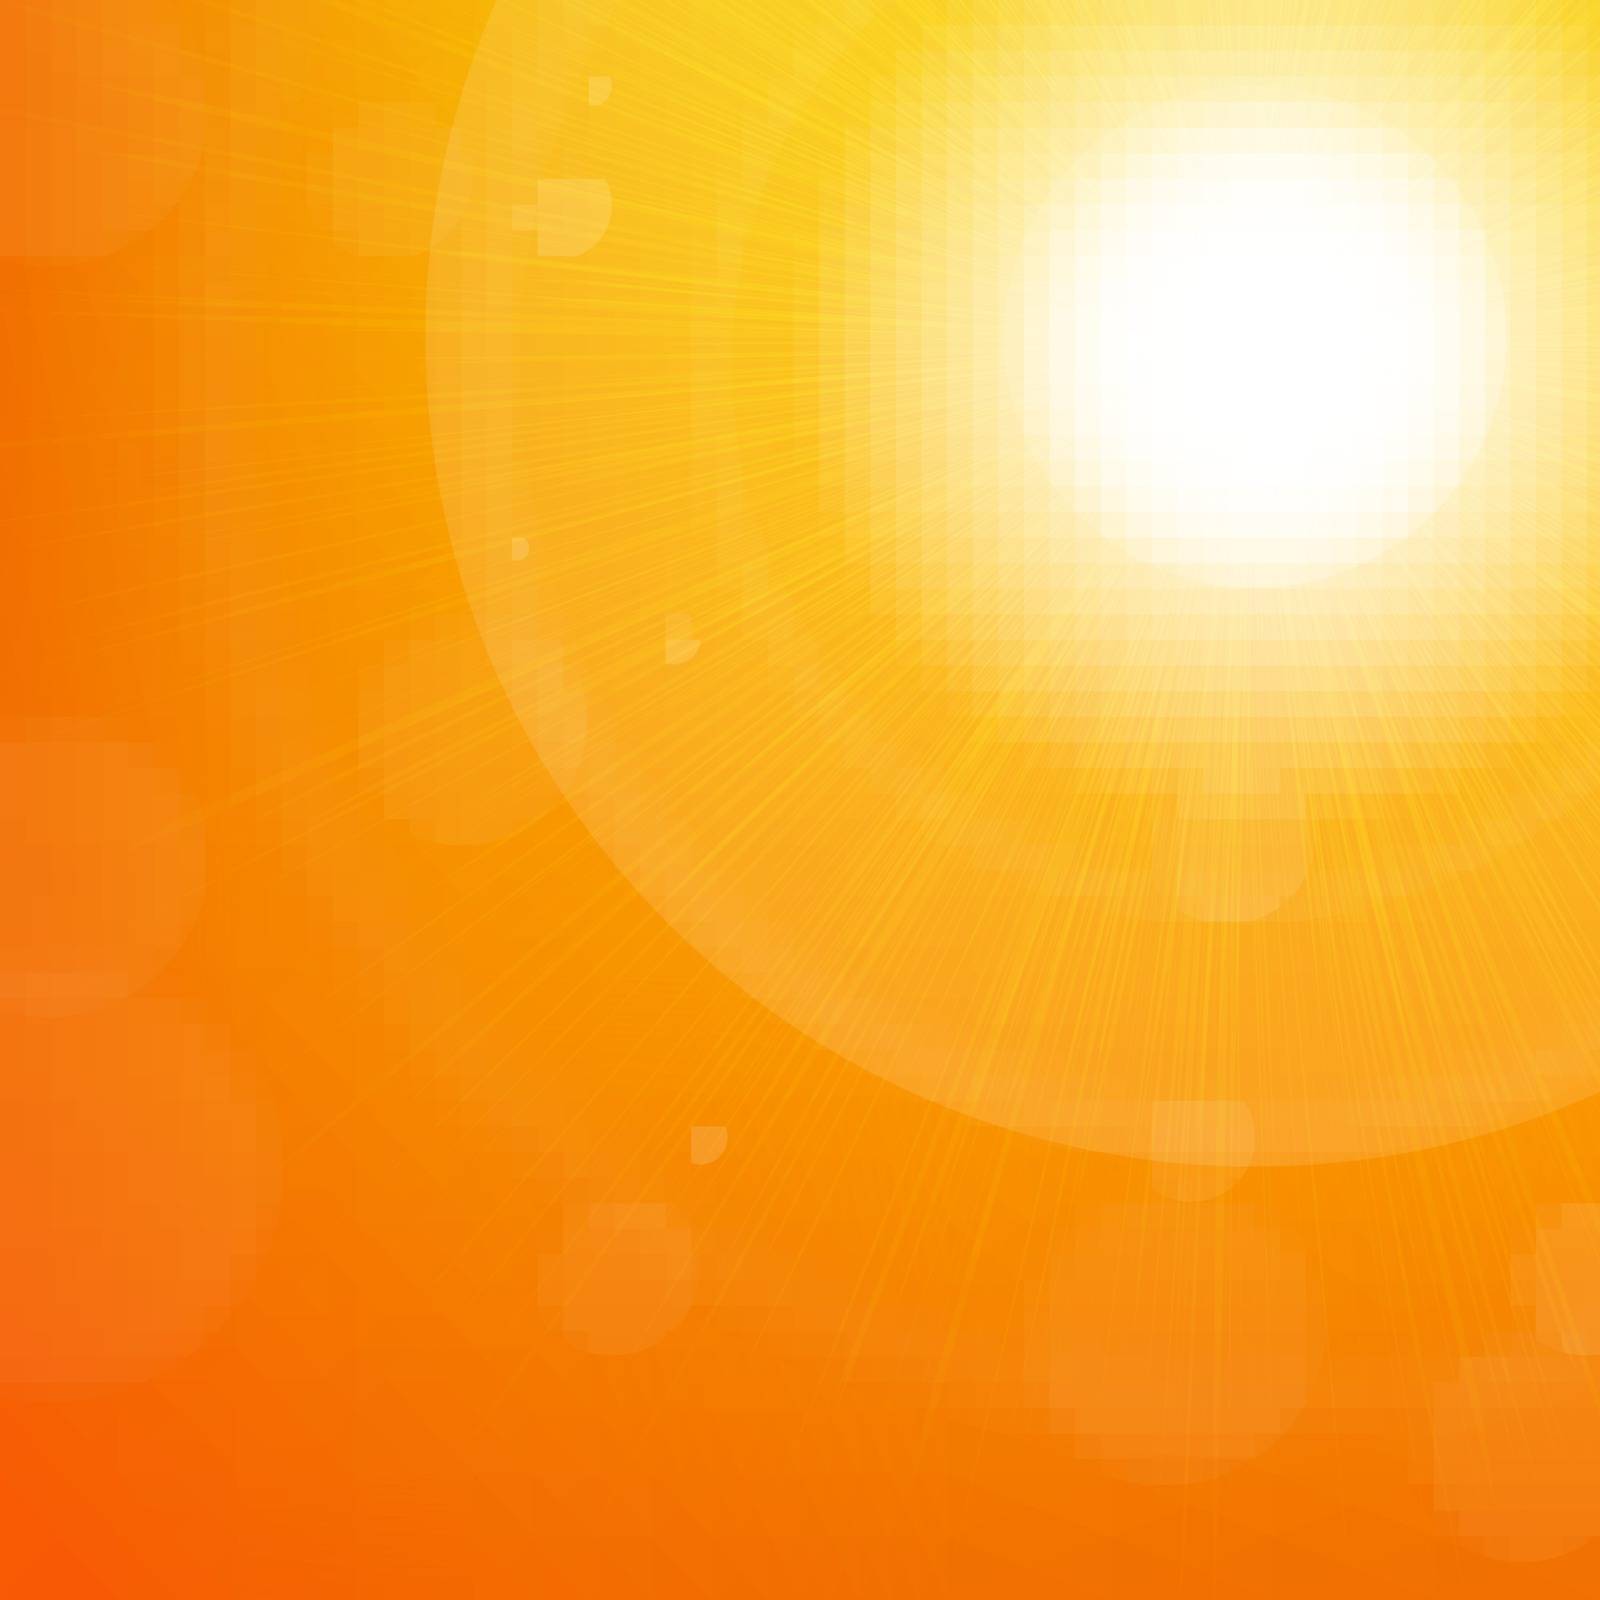 Sunburst Background With Gradient Mesh, Vector Illustration